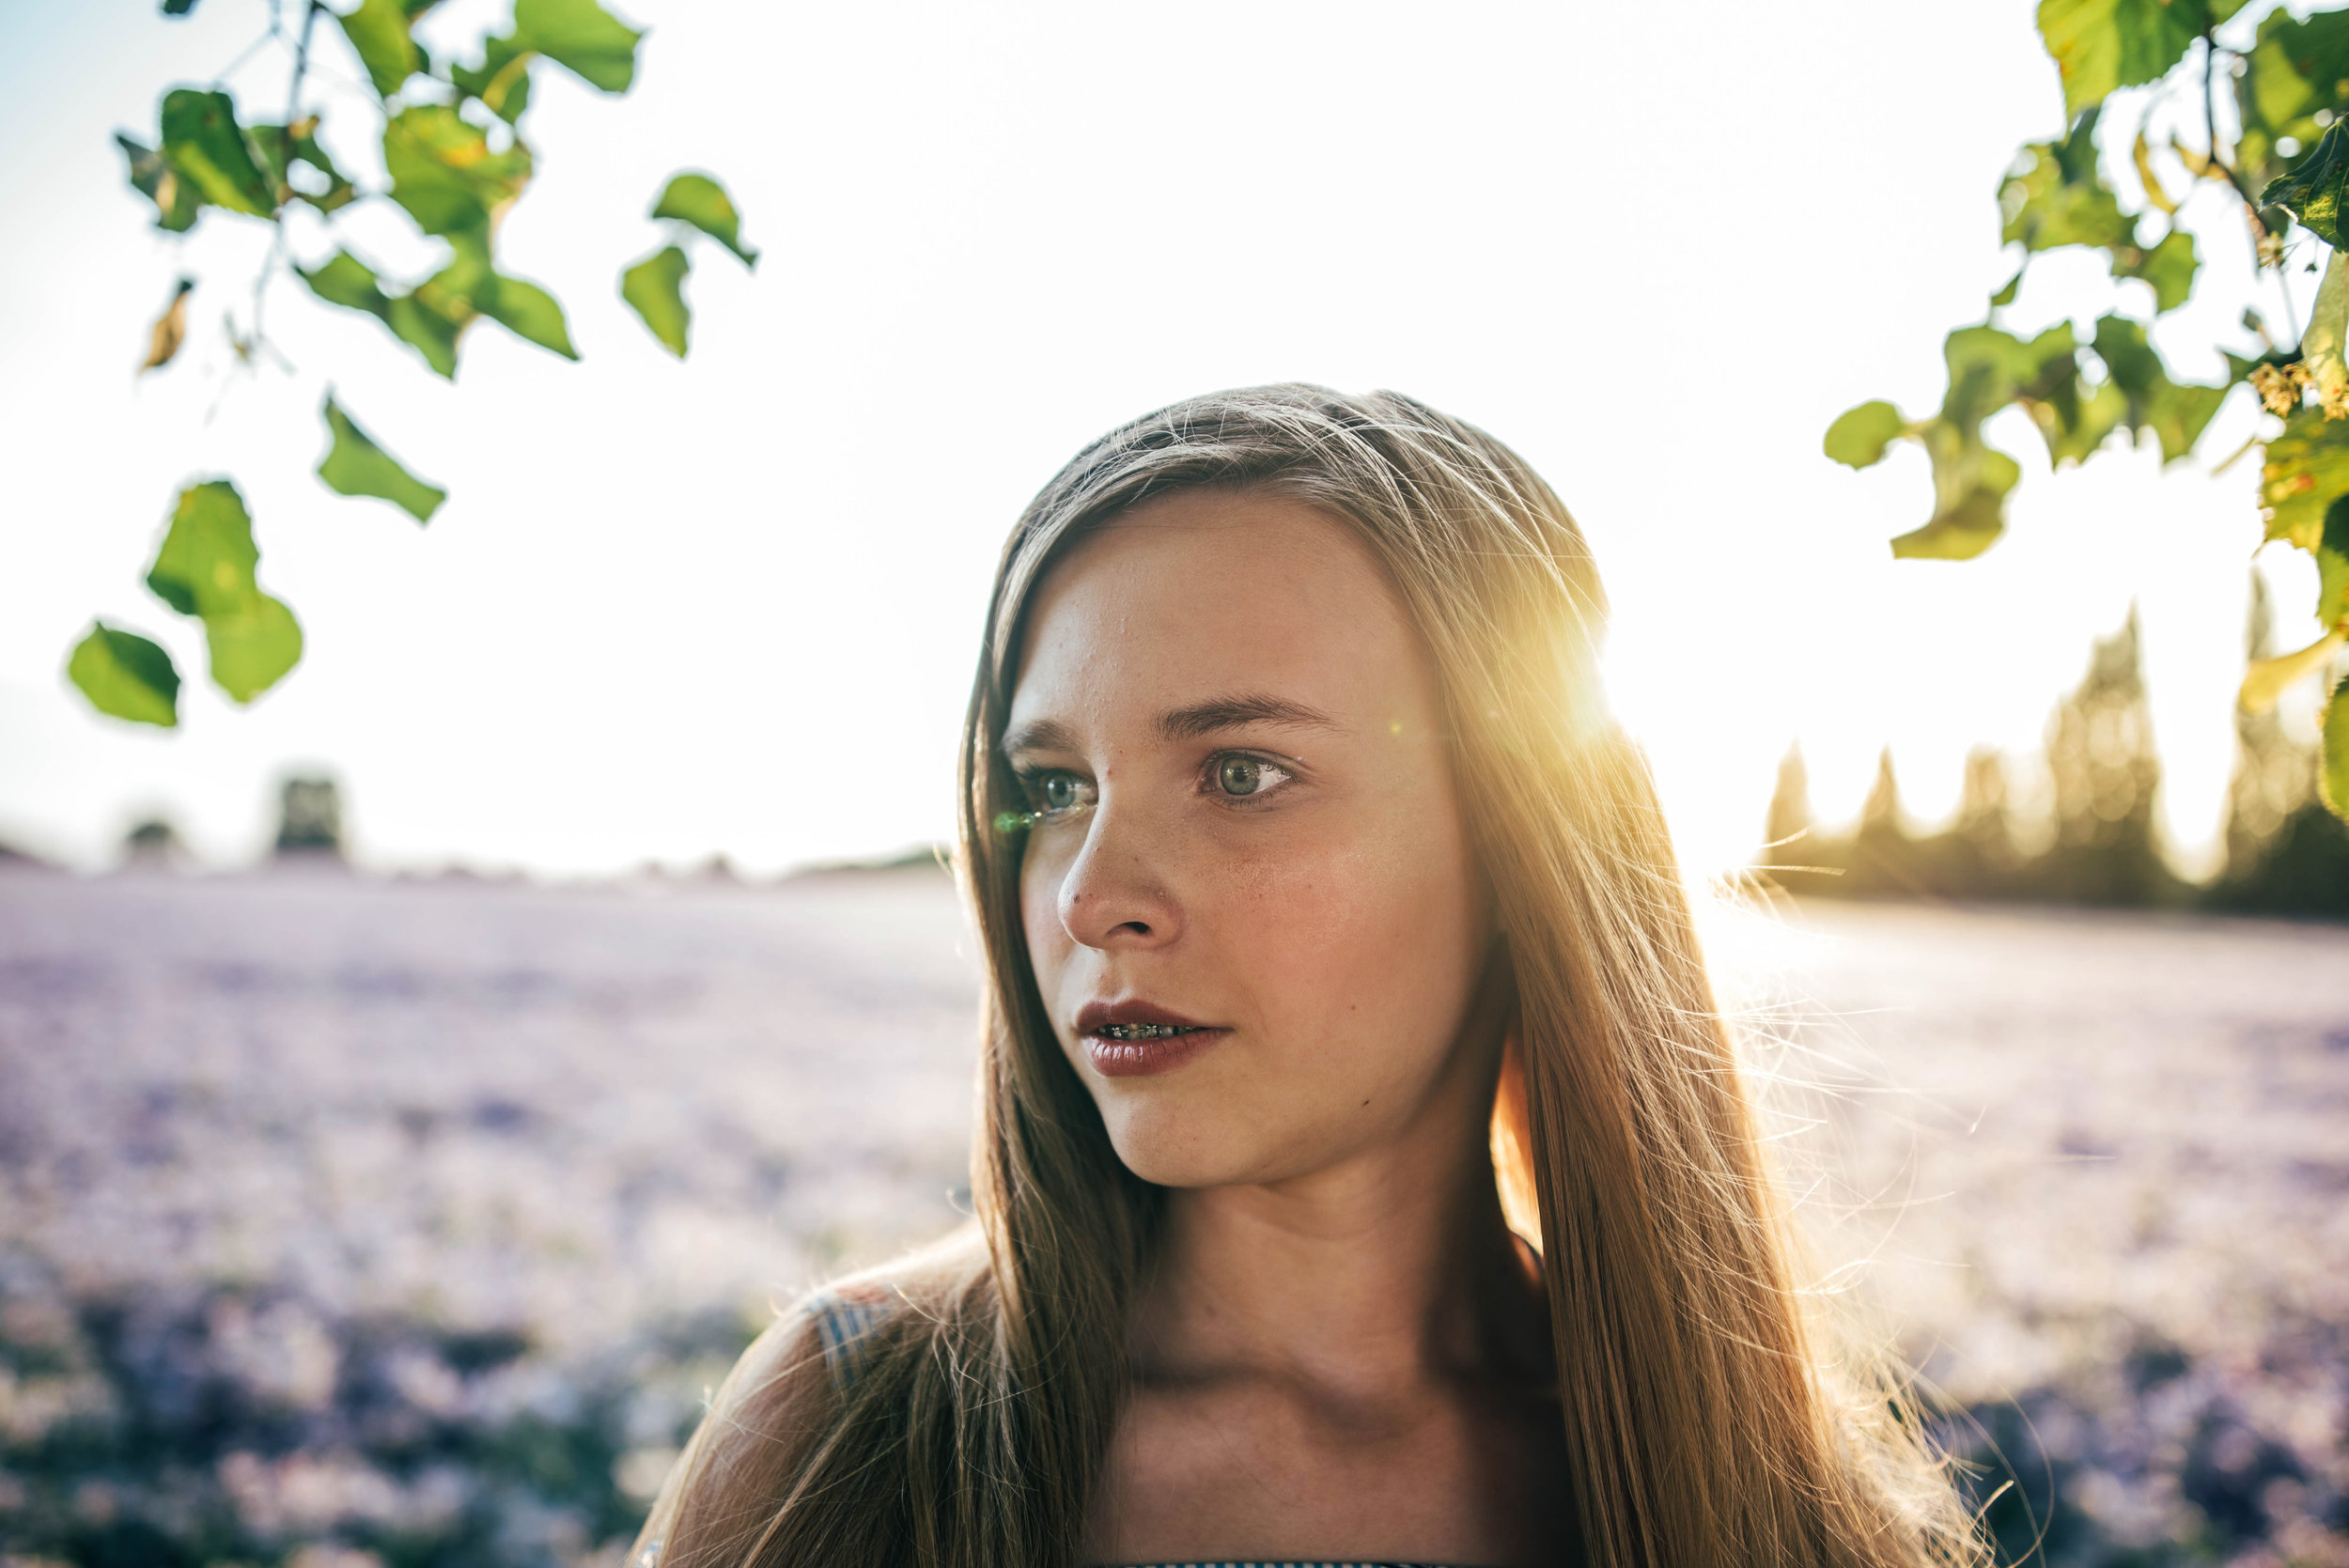 Teen girl in purple field at sunset Essex UK Documentary Portrait photographerw